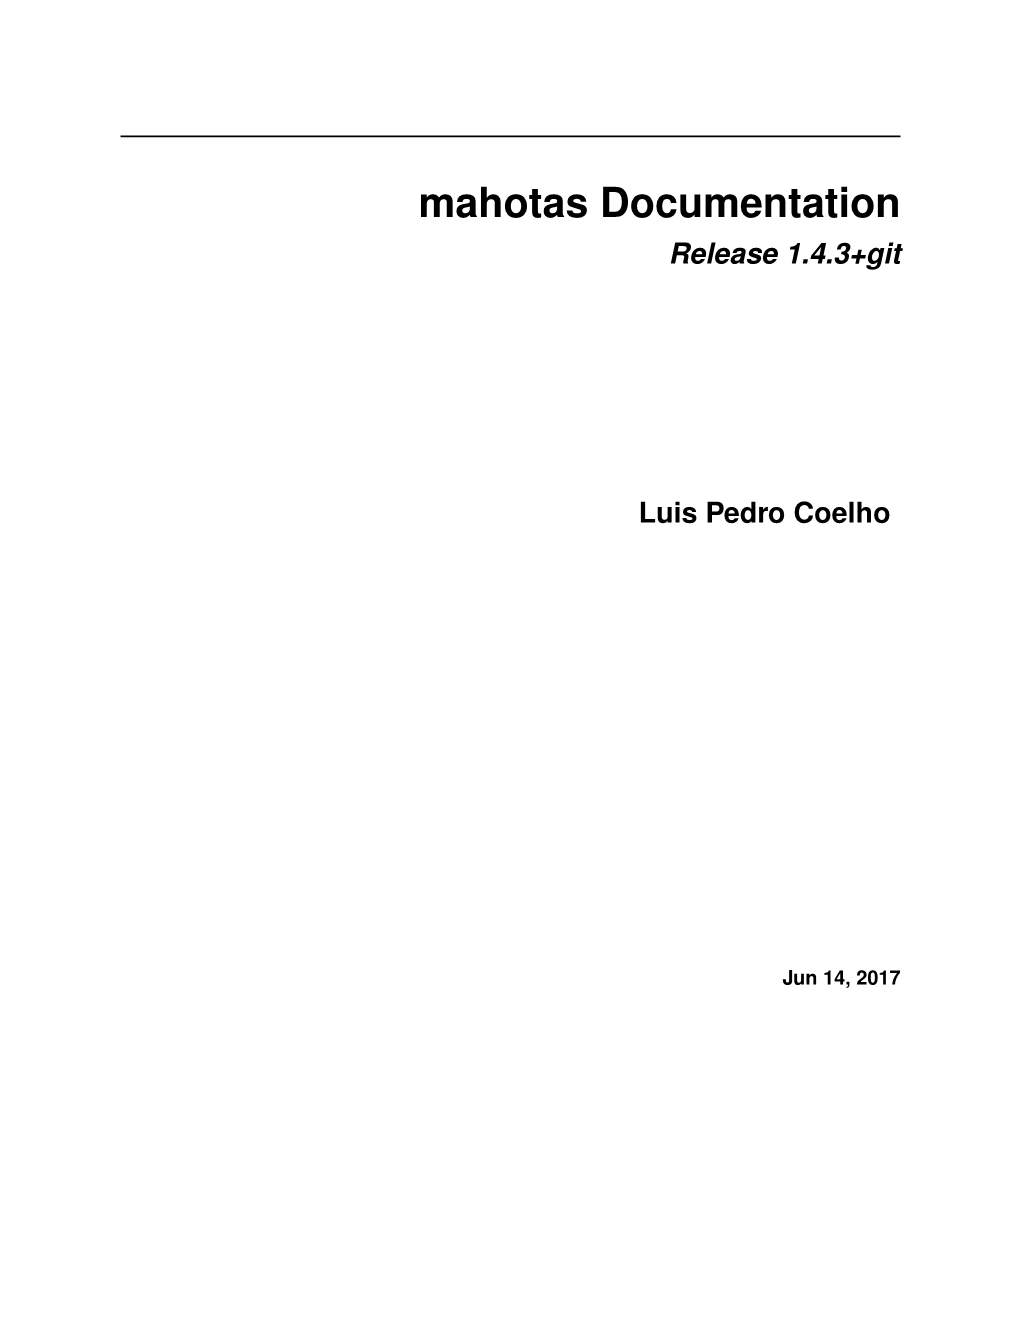 Mahotas Documentation Release 1.4.3+Git